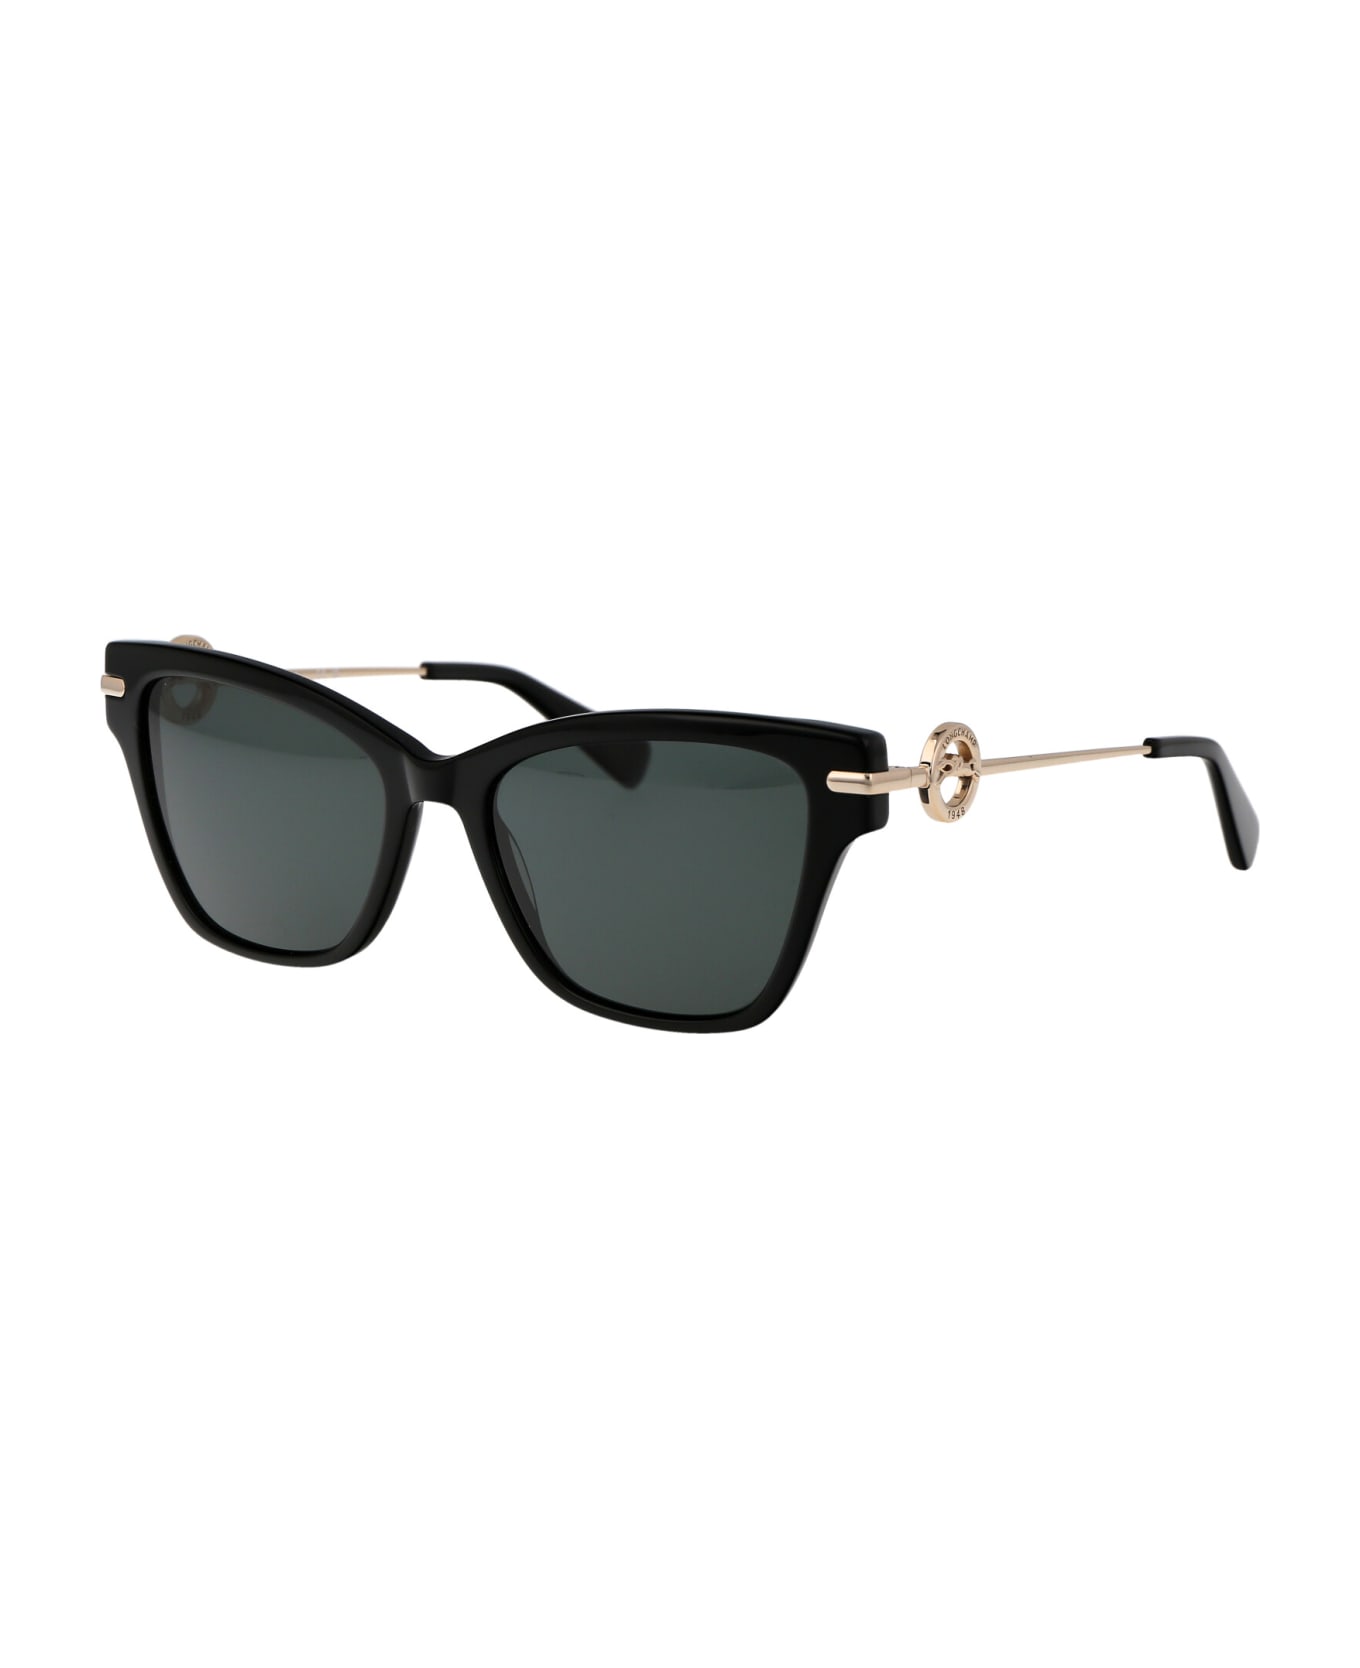 Longchamp Lo737s Sunglasses - 001 BLACK